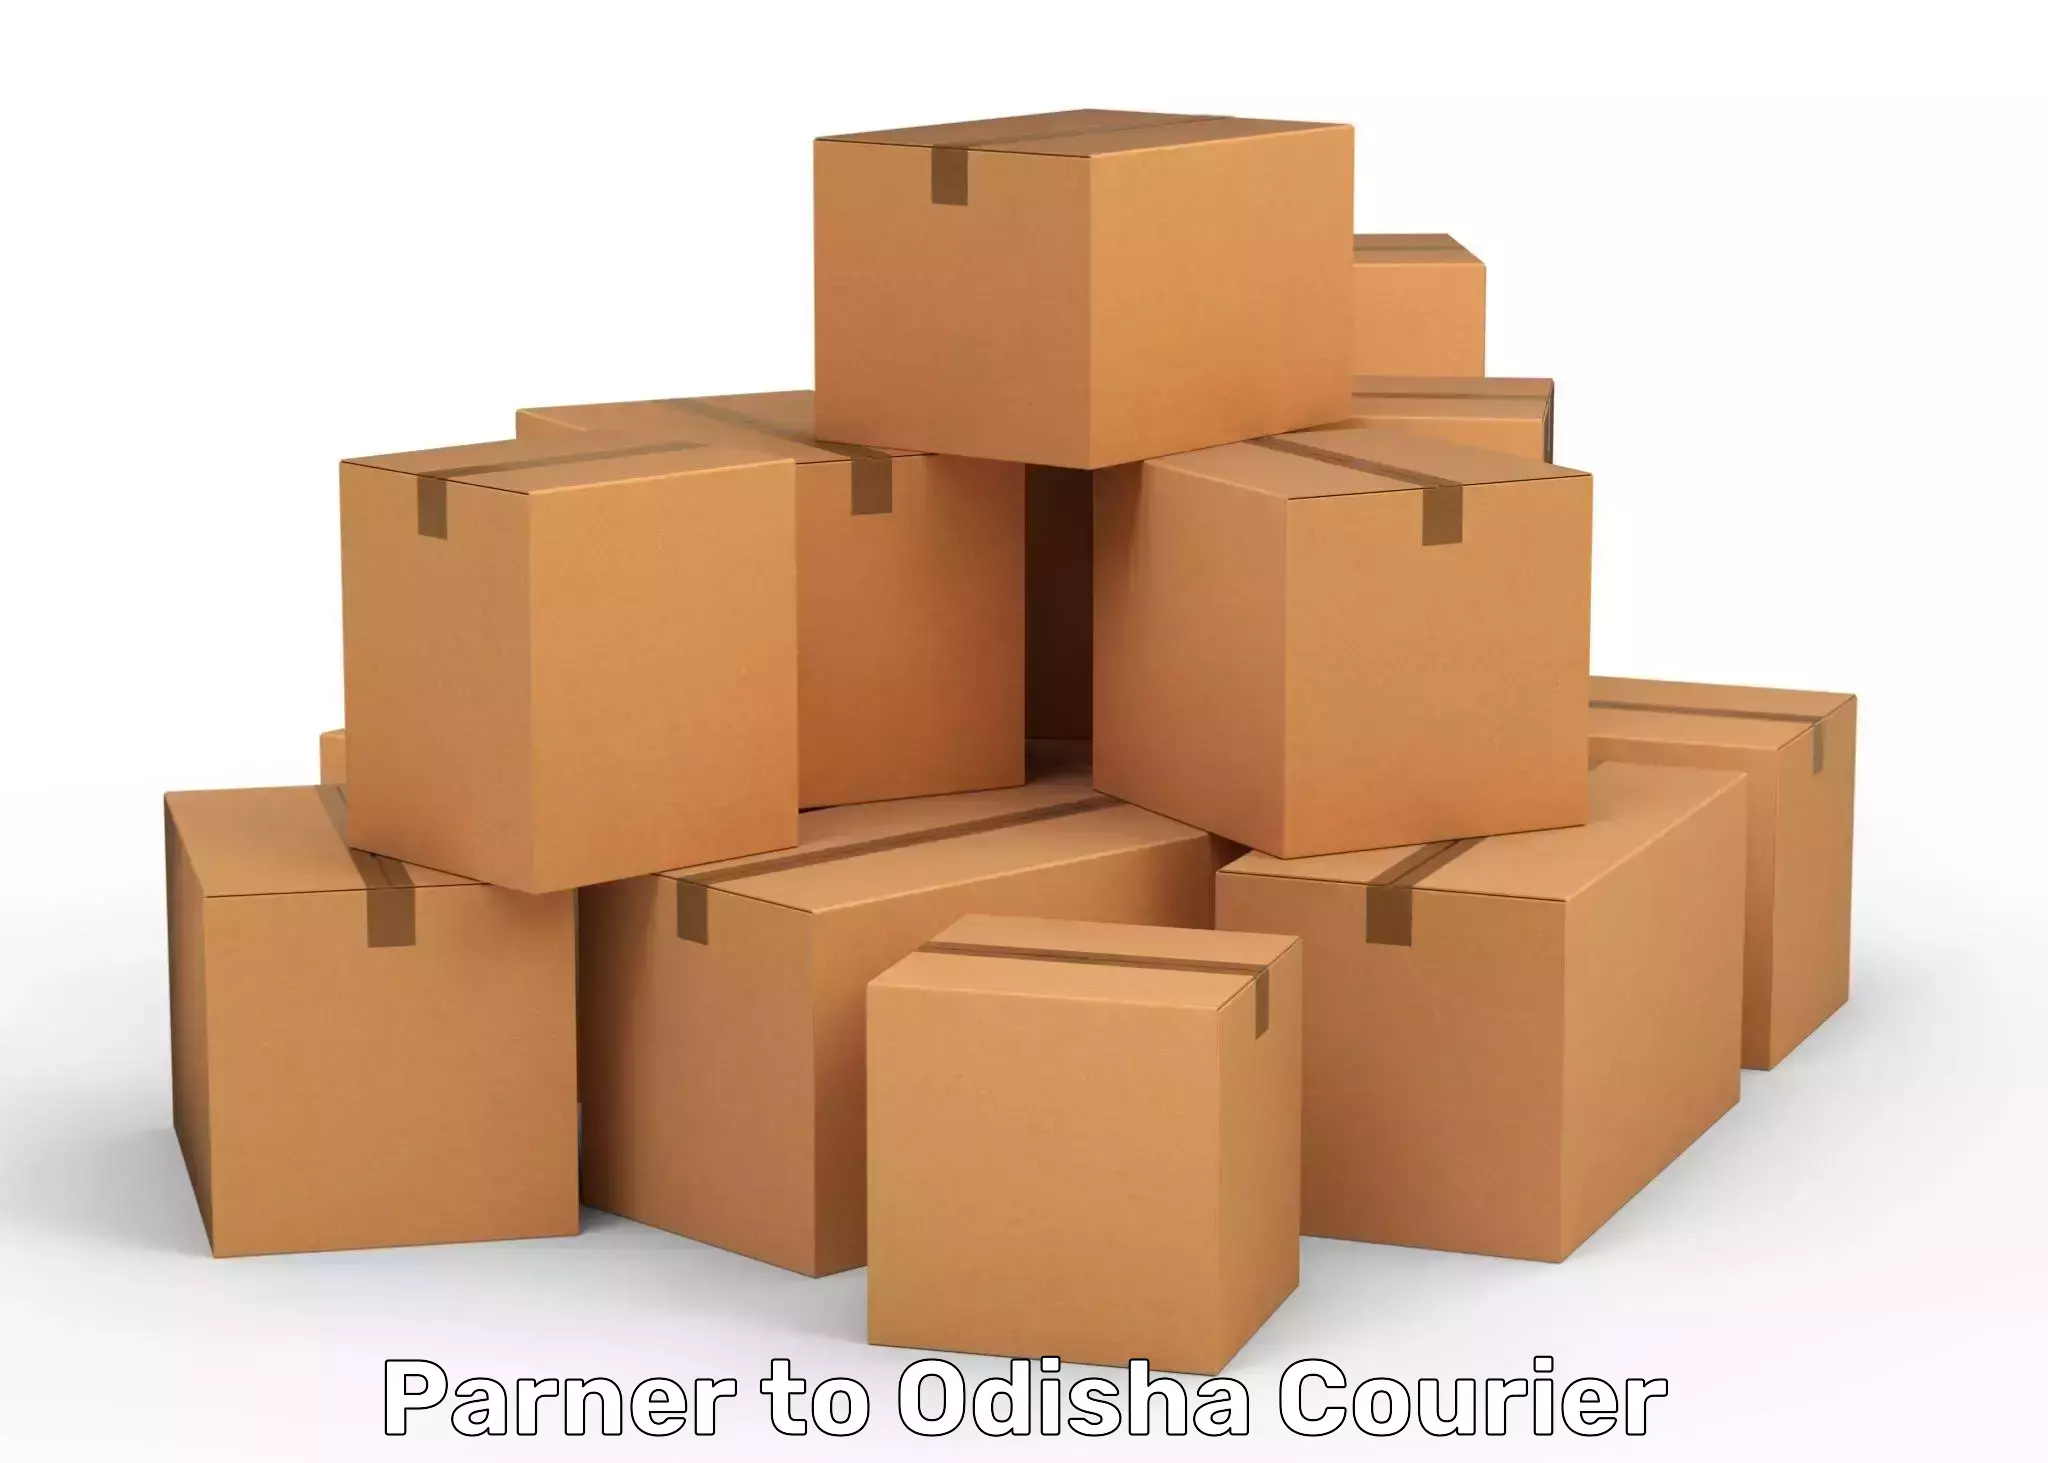 Delivery service partnership Parner to Patnagarh